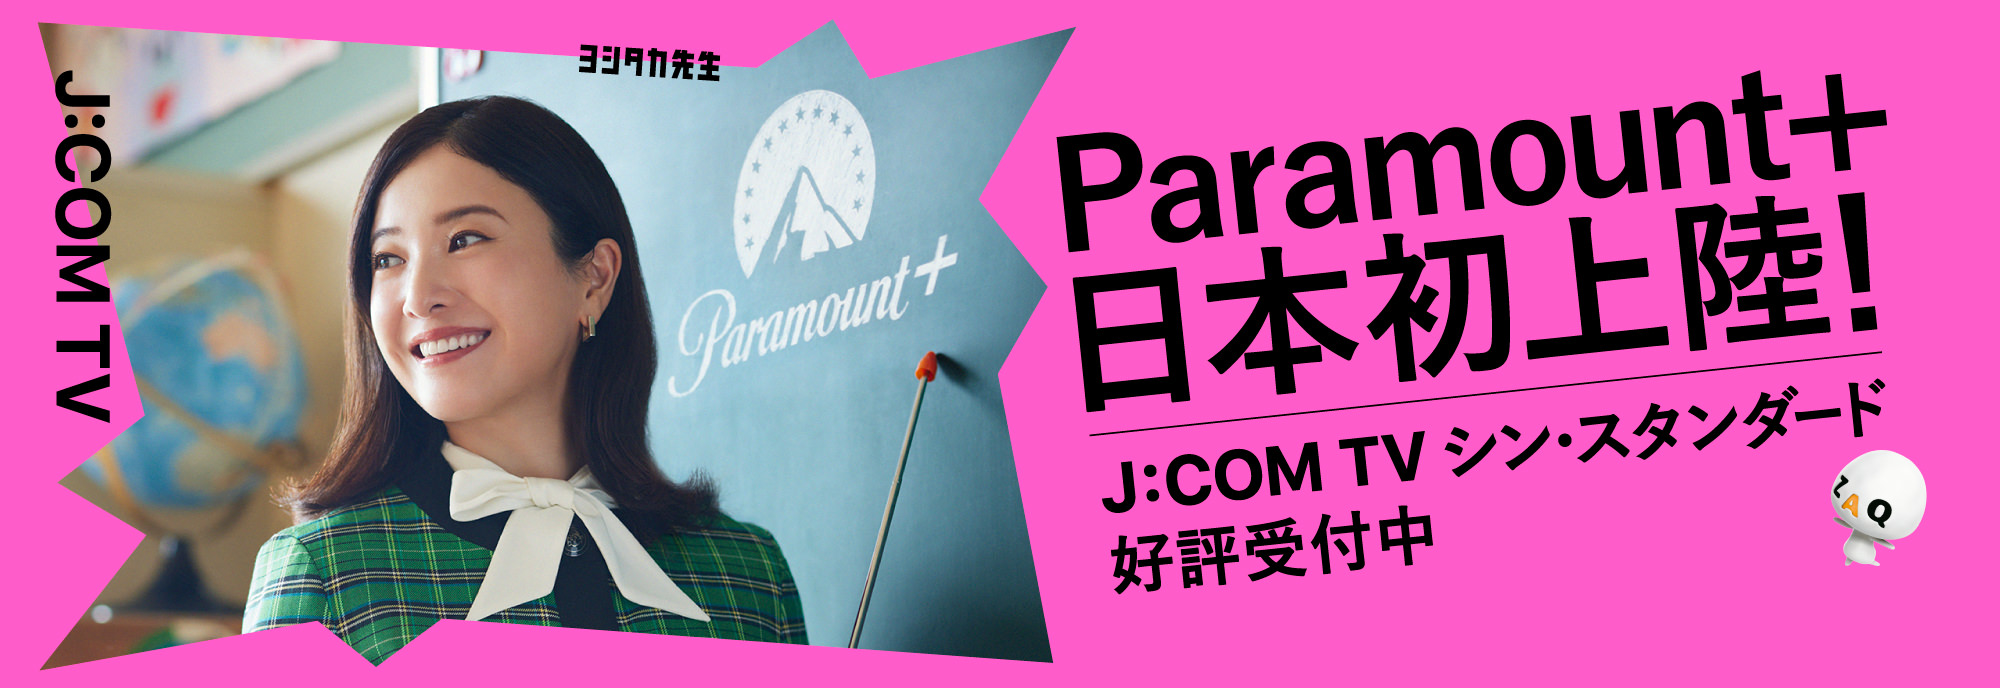 Paramount+ 日本初上陸！J:COM TV シン・スタンダード好評受付中